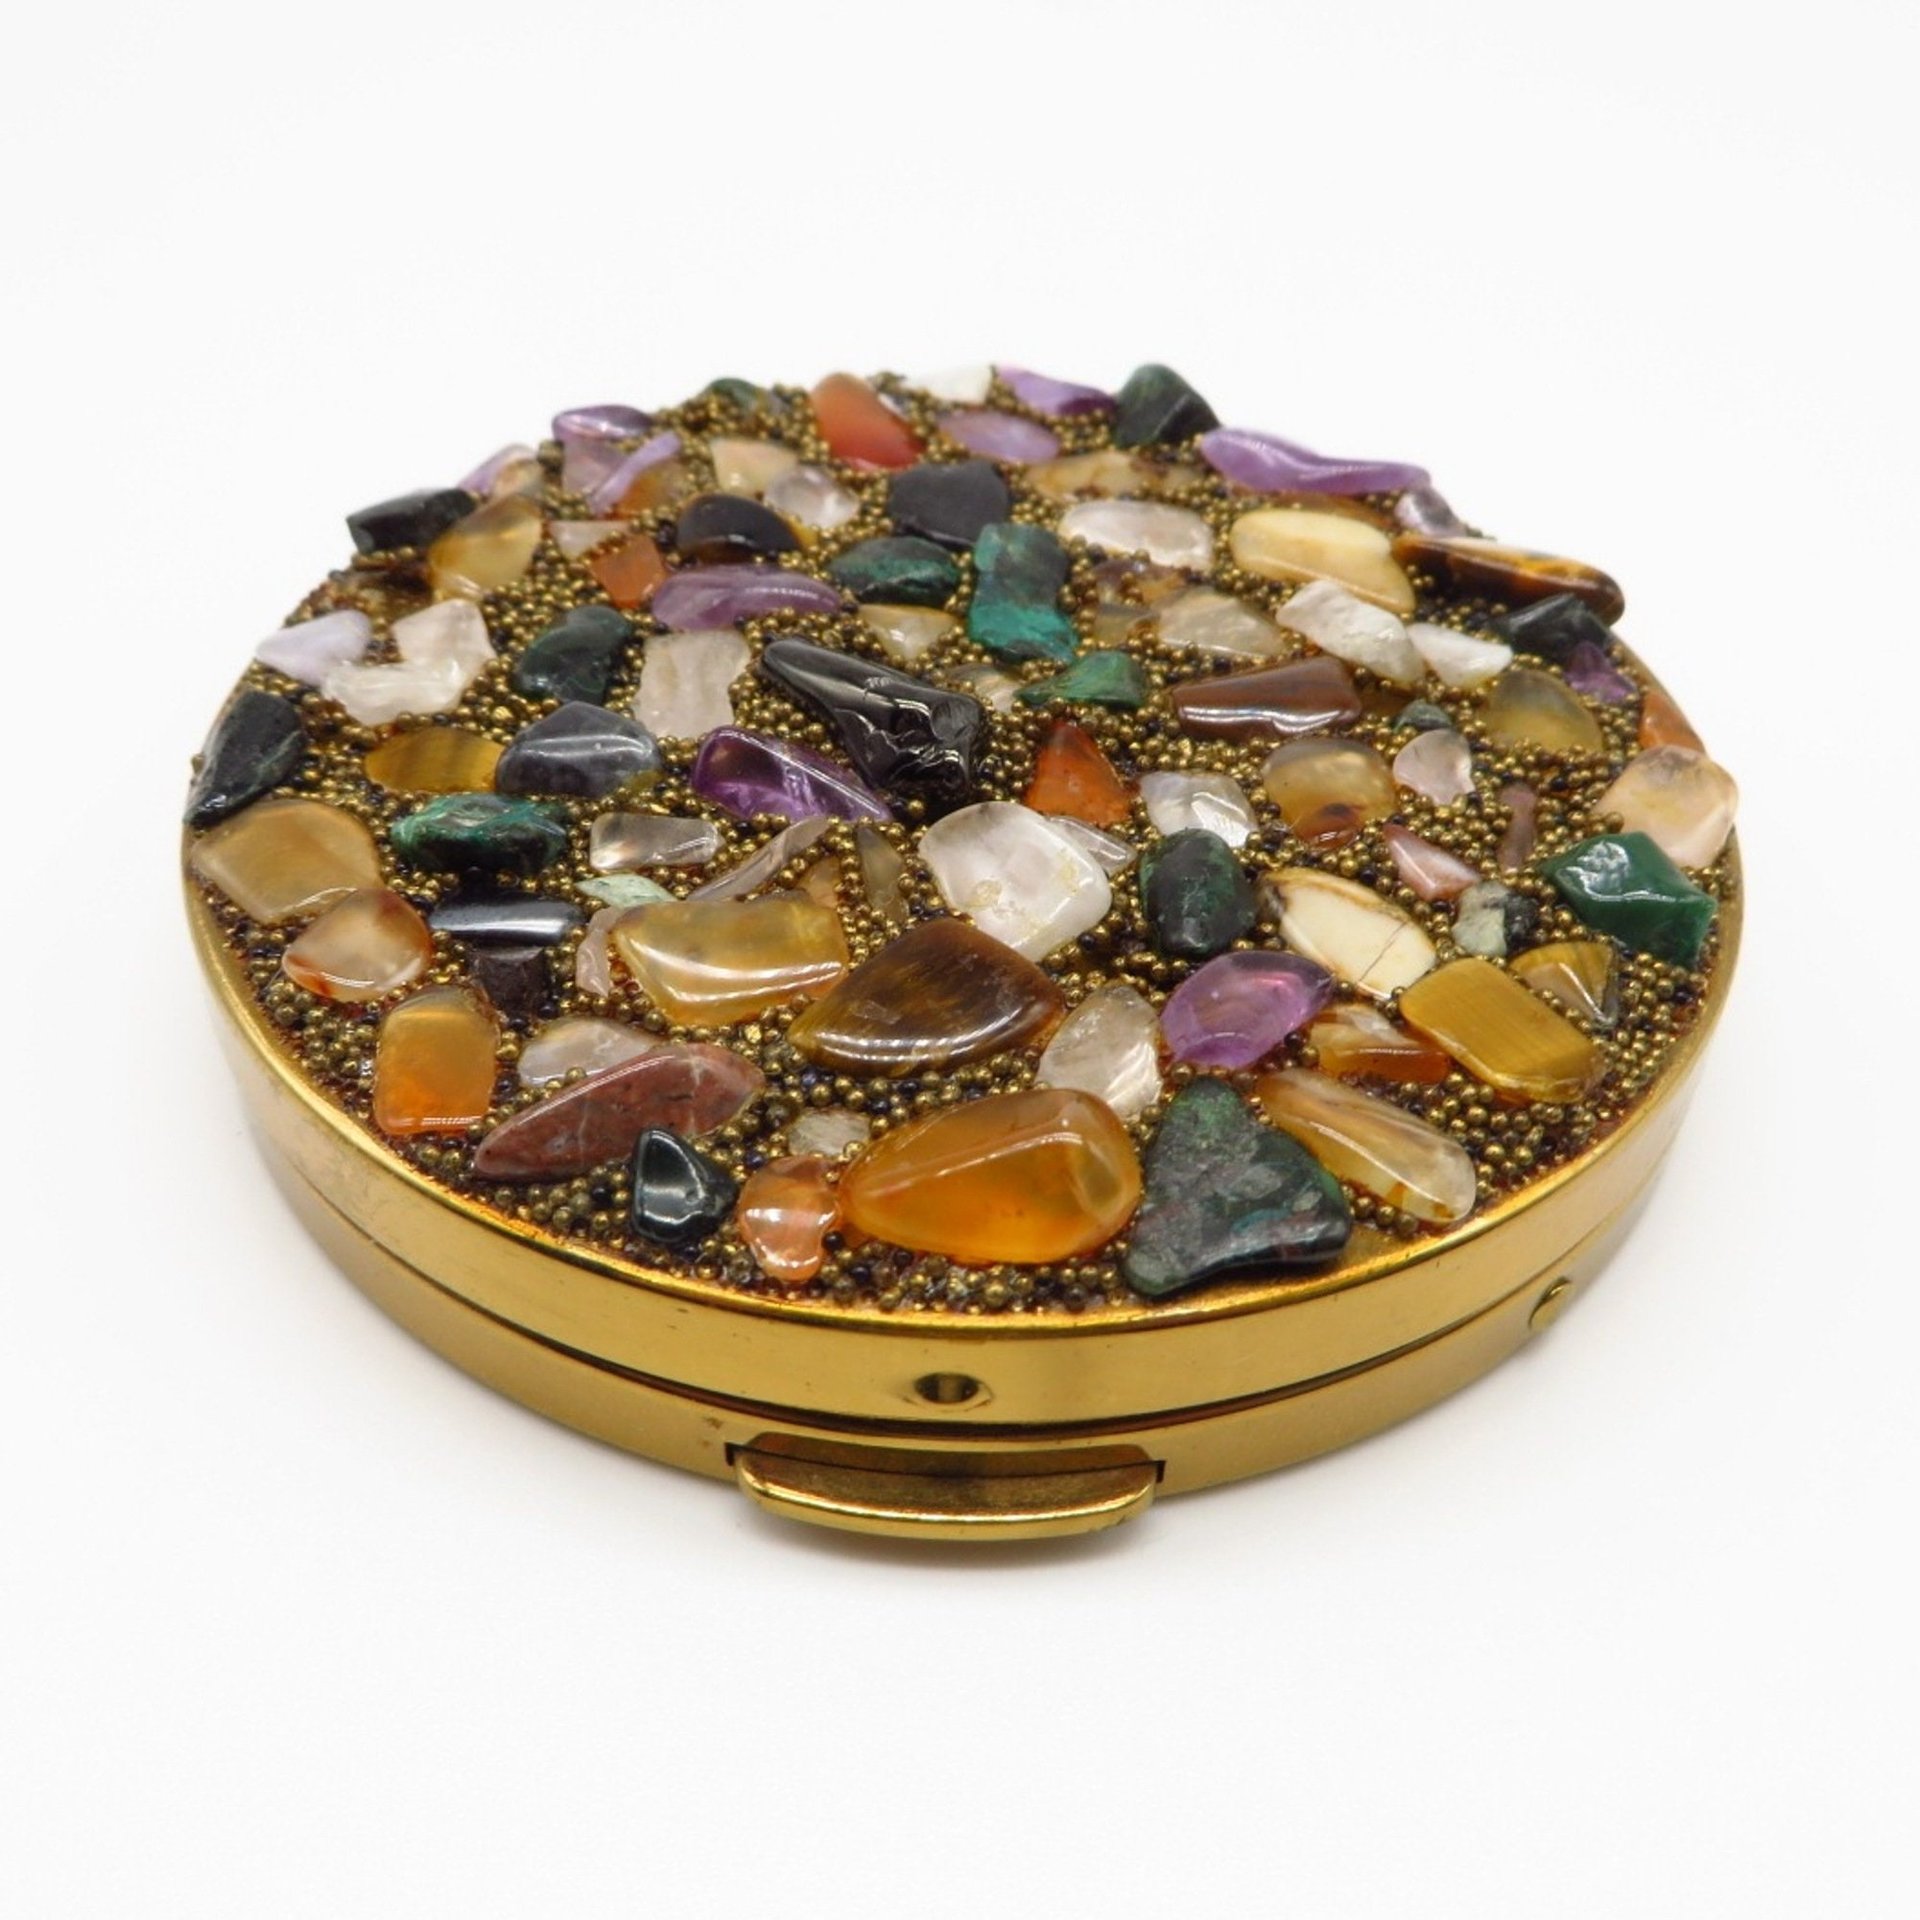 Sam Fink Compact, Semi-Precious Stones Round Gold Tone Mirrored Powder Makeup Case